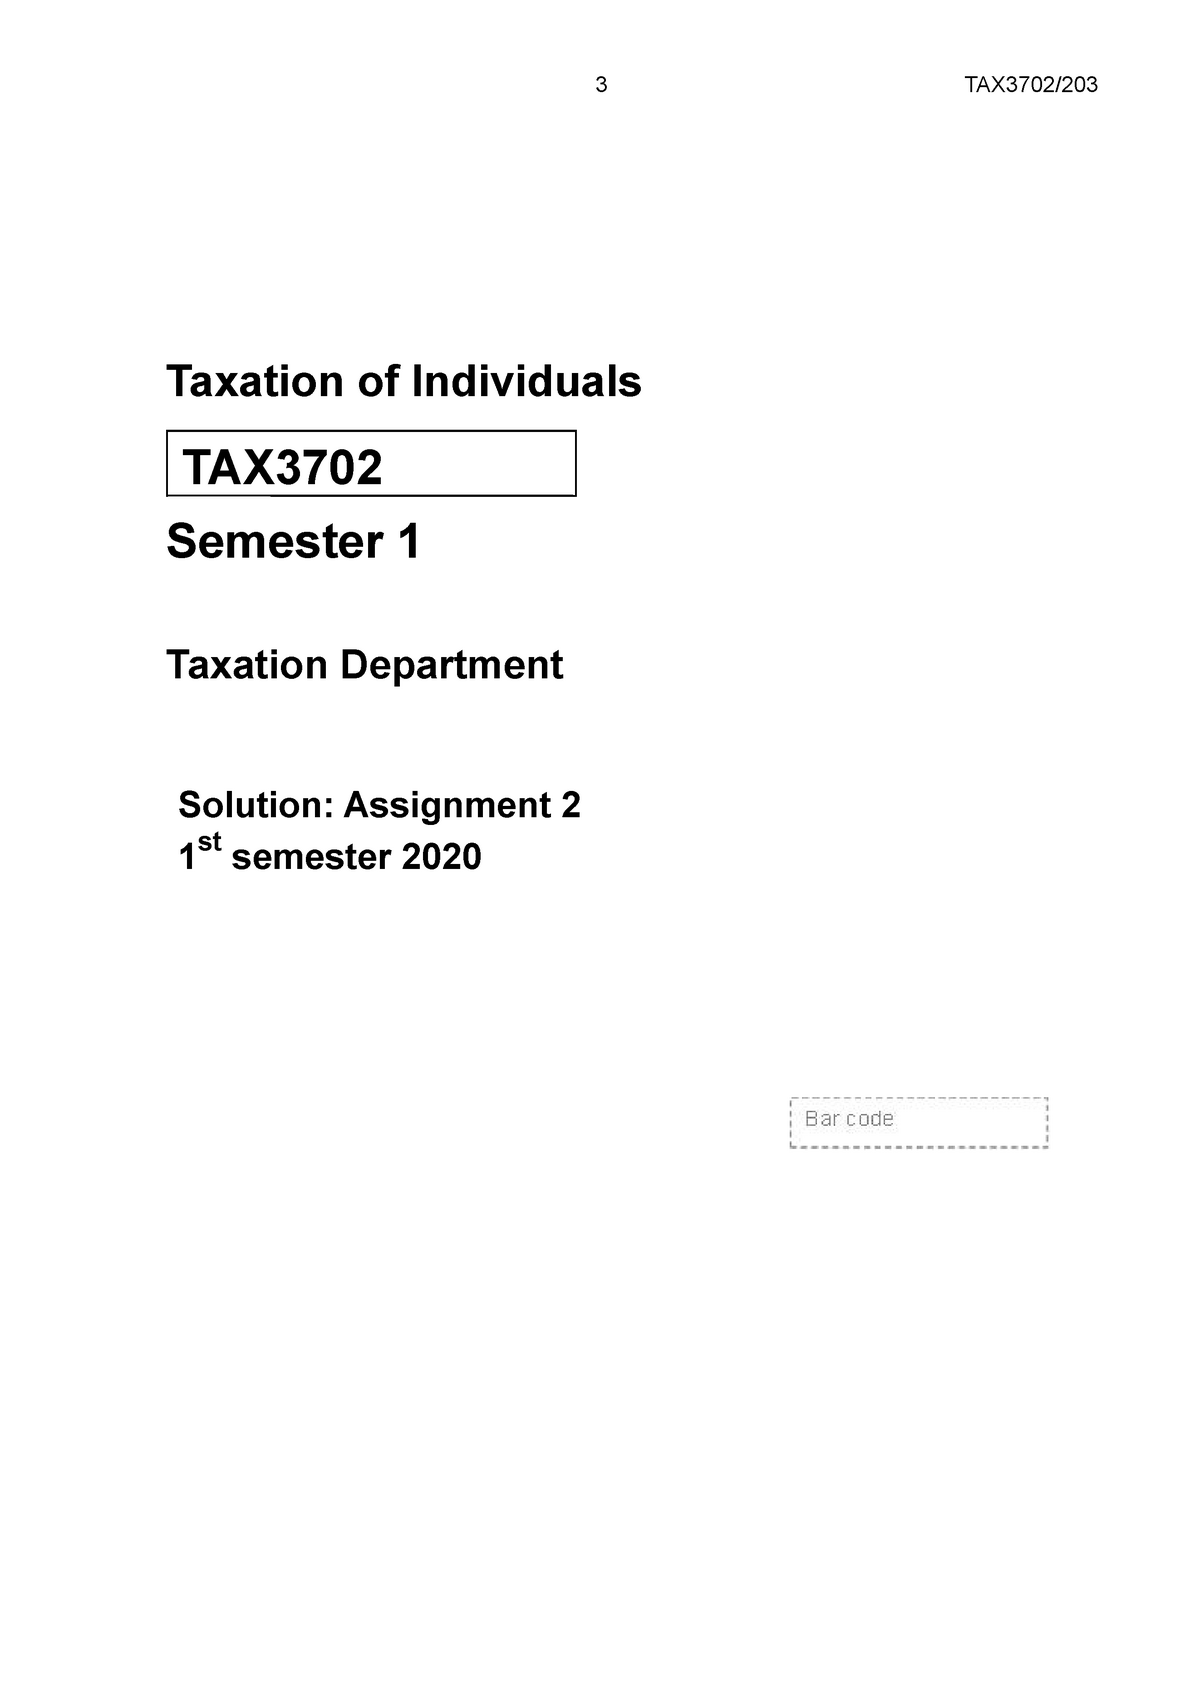 tax3701 assignment 2